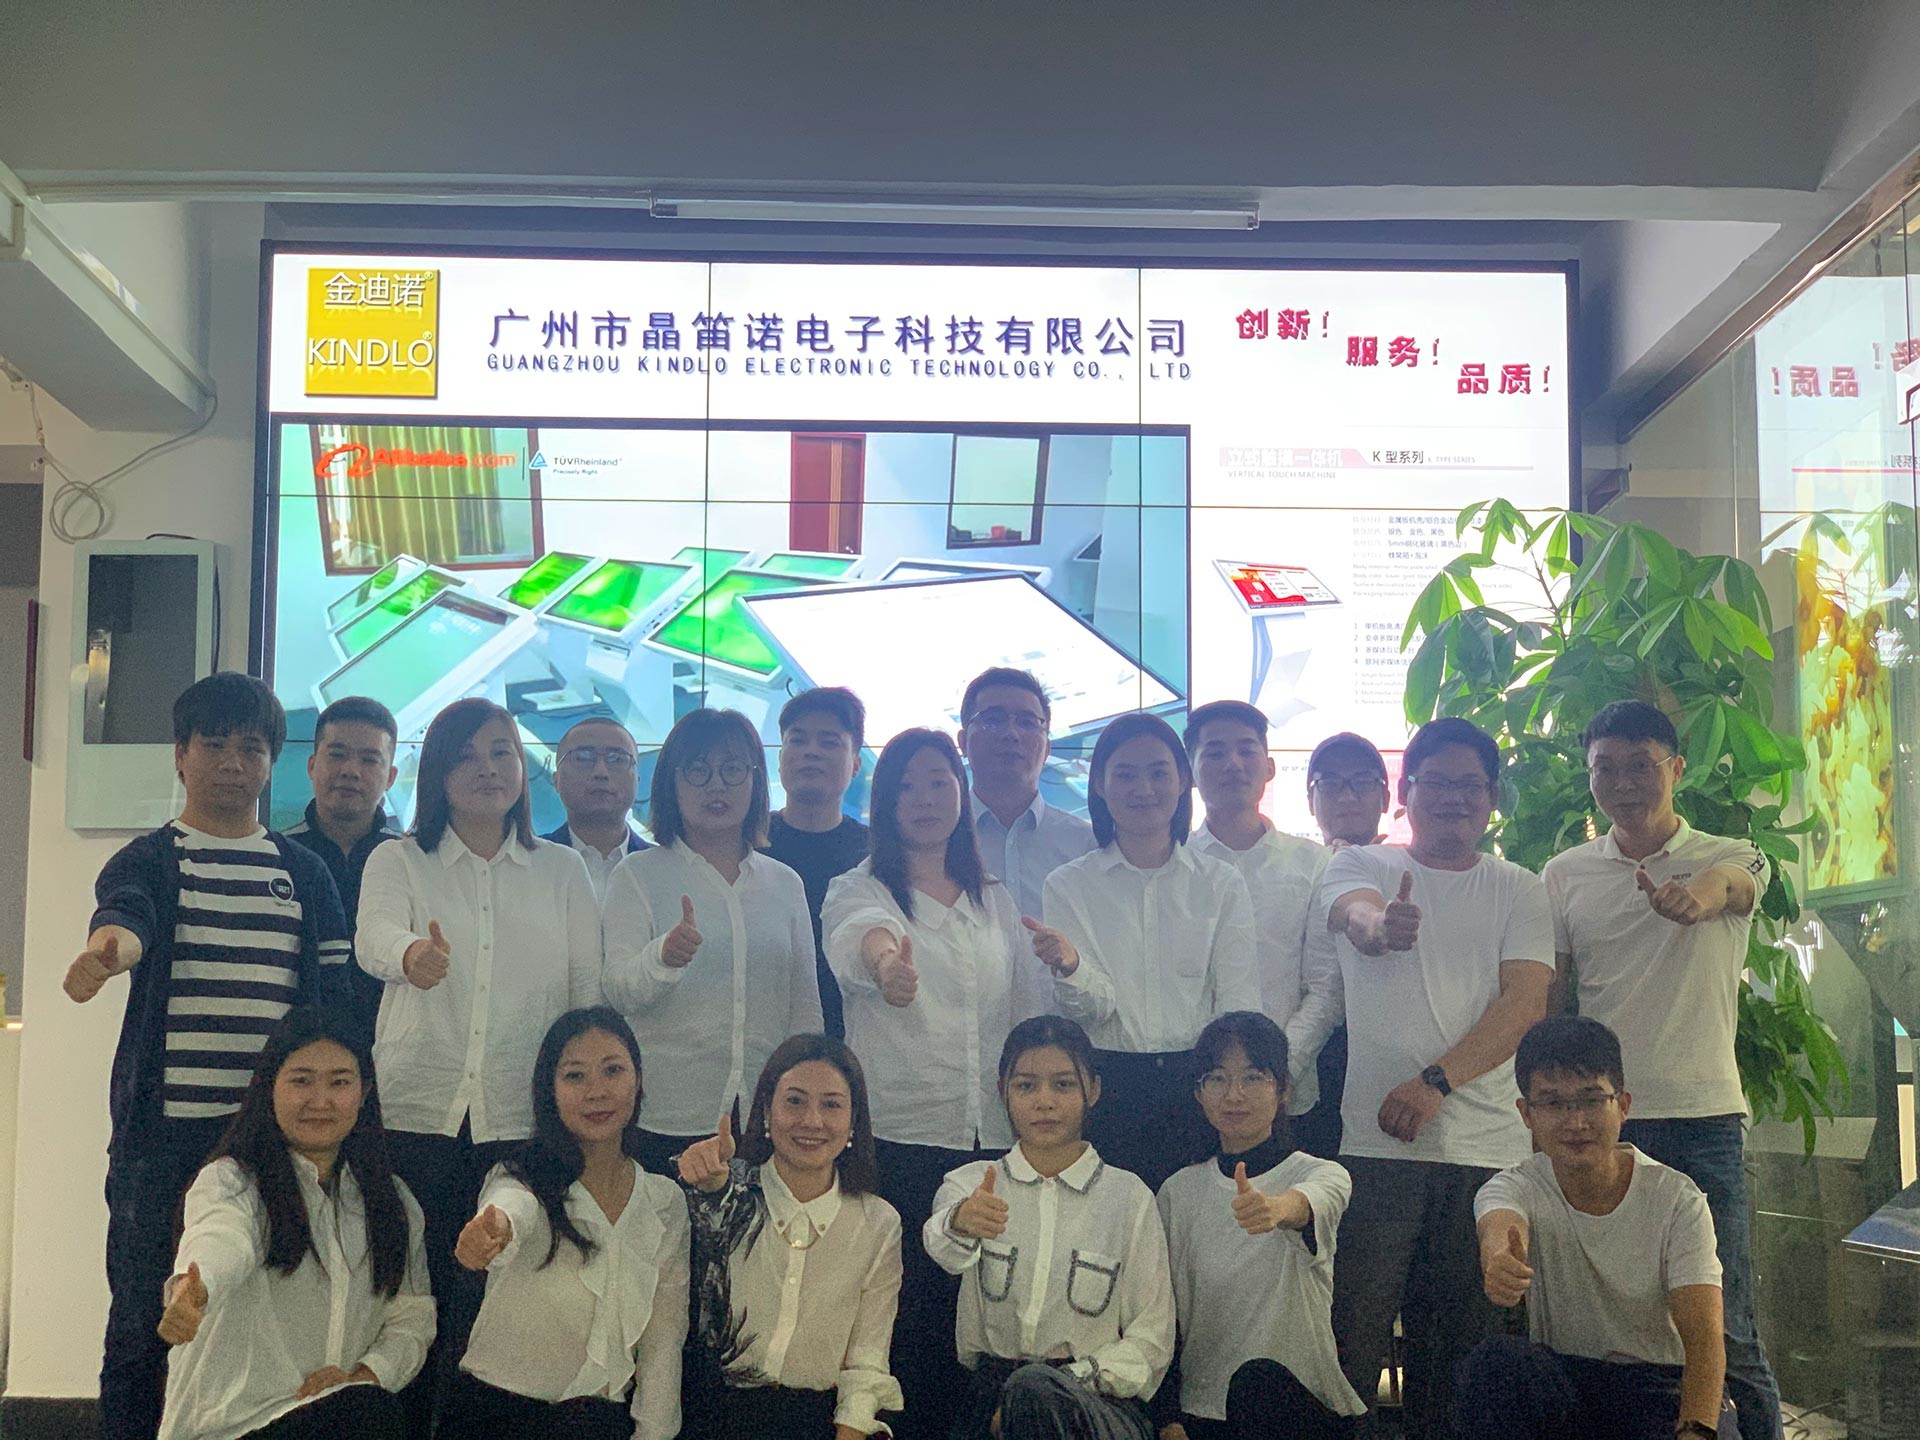 الصين Guangzhou Jingdinuo Electronic Technology Co., Ltd.